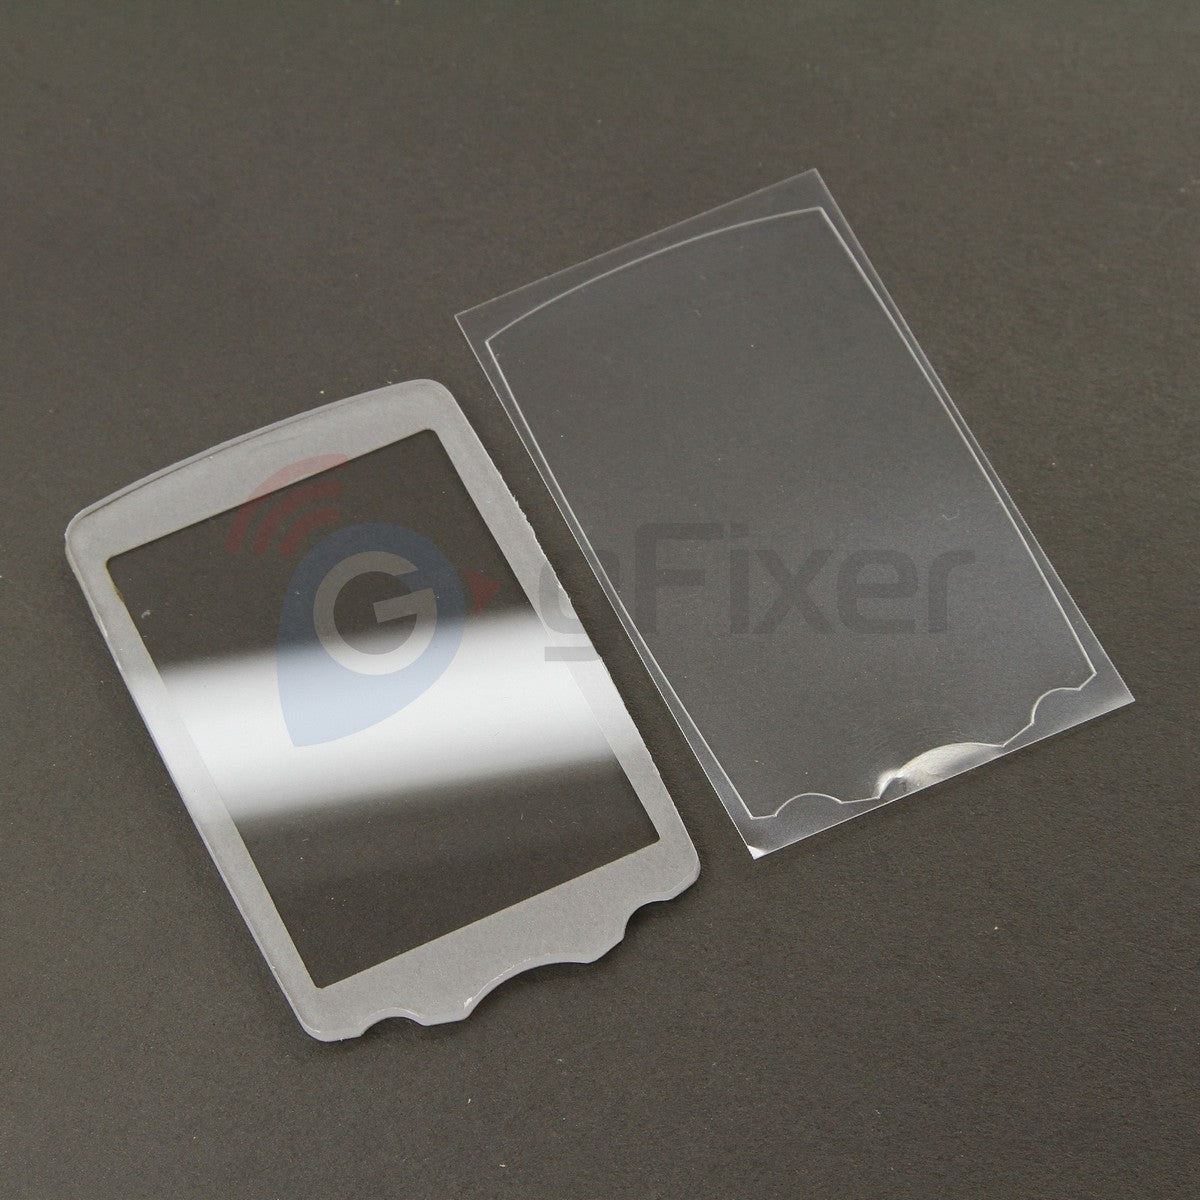 New Shock proof glass for Garmin GPSMAP 60 2mm part 60C 60CS 60Cx 60CSx  lens